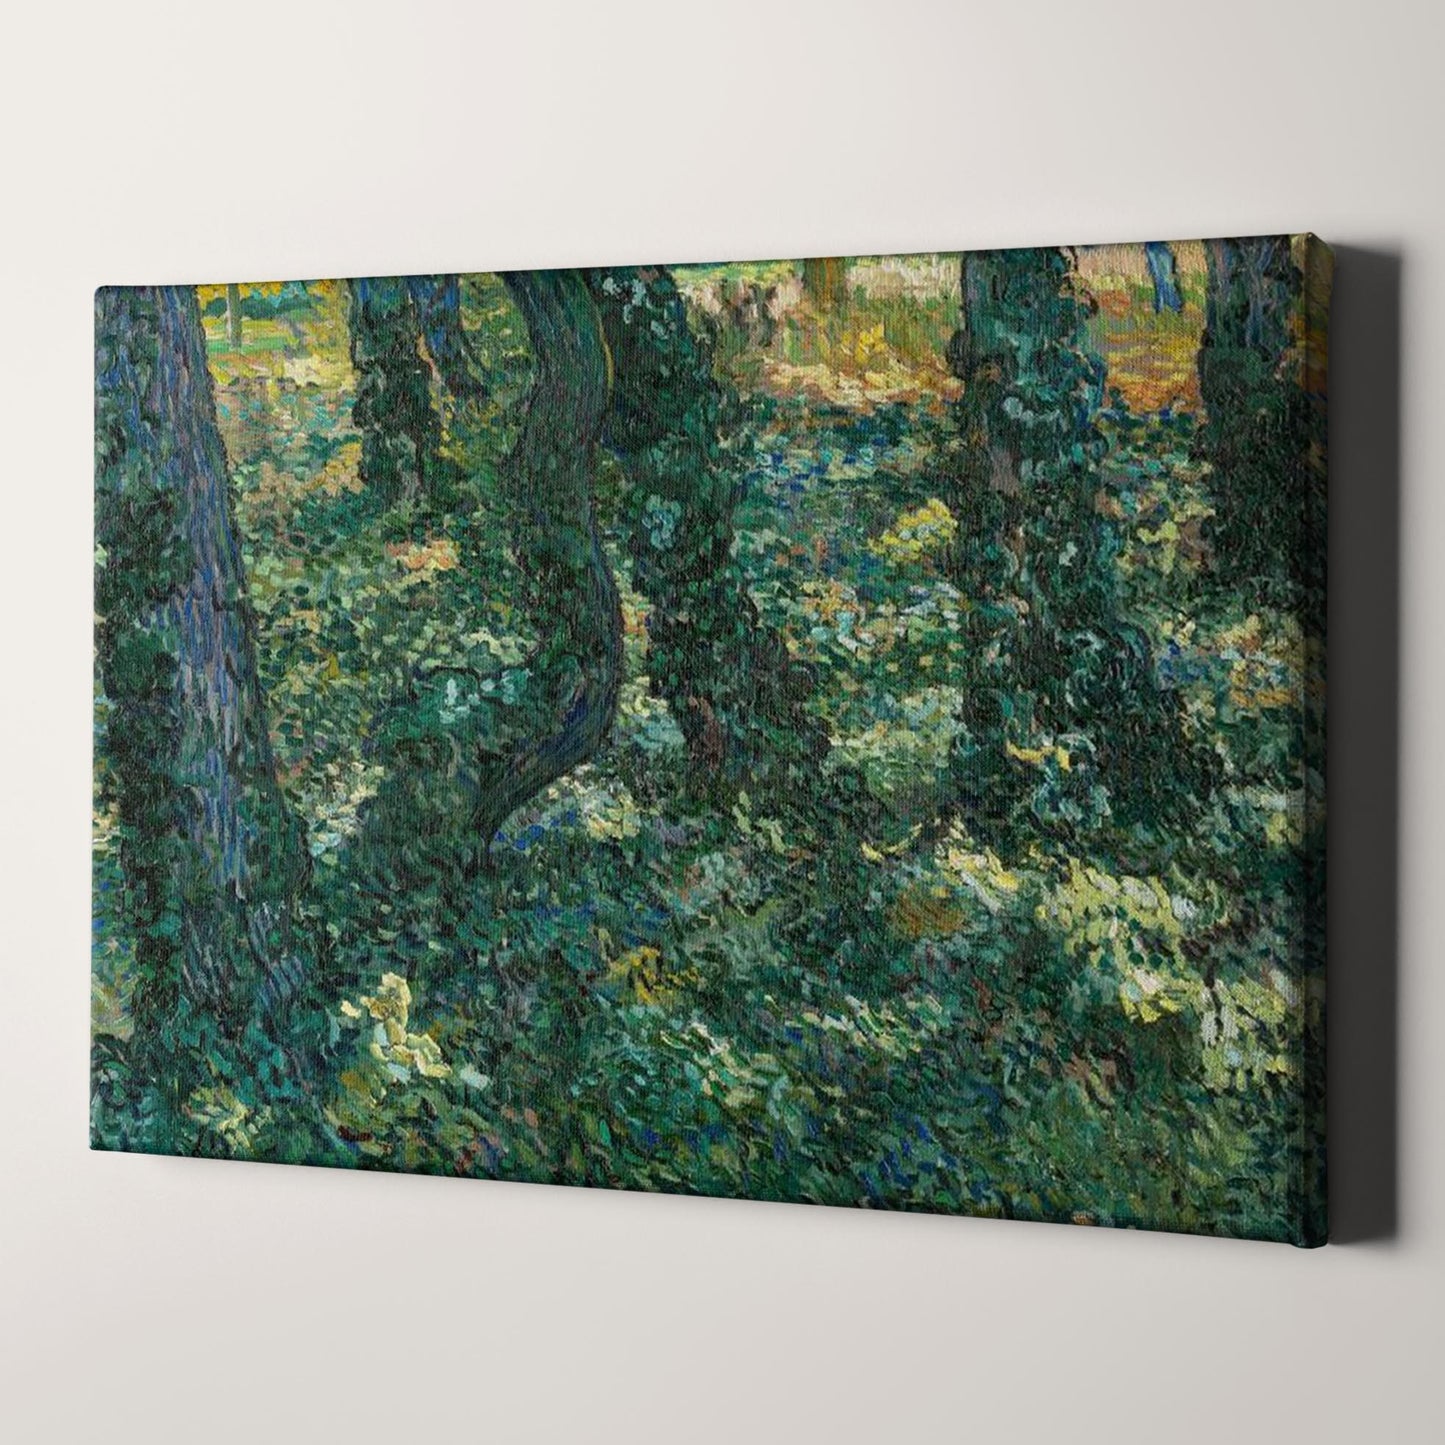 Undergrowth (1889) by Van Gogh